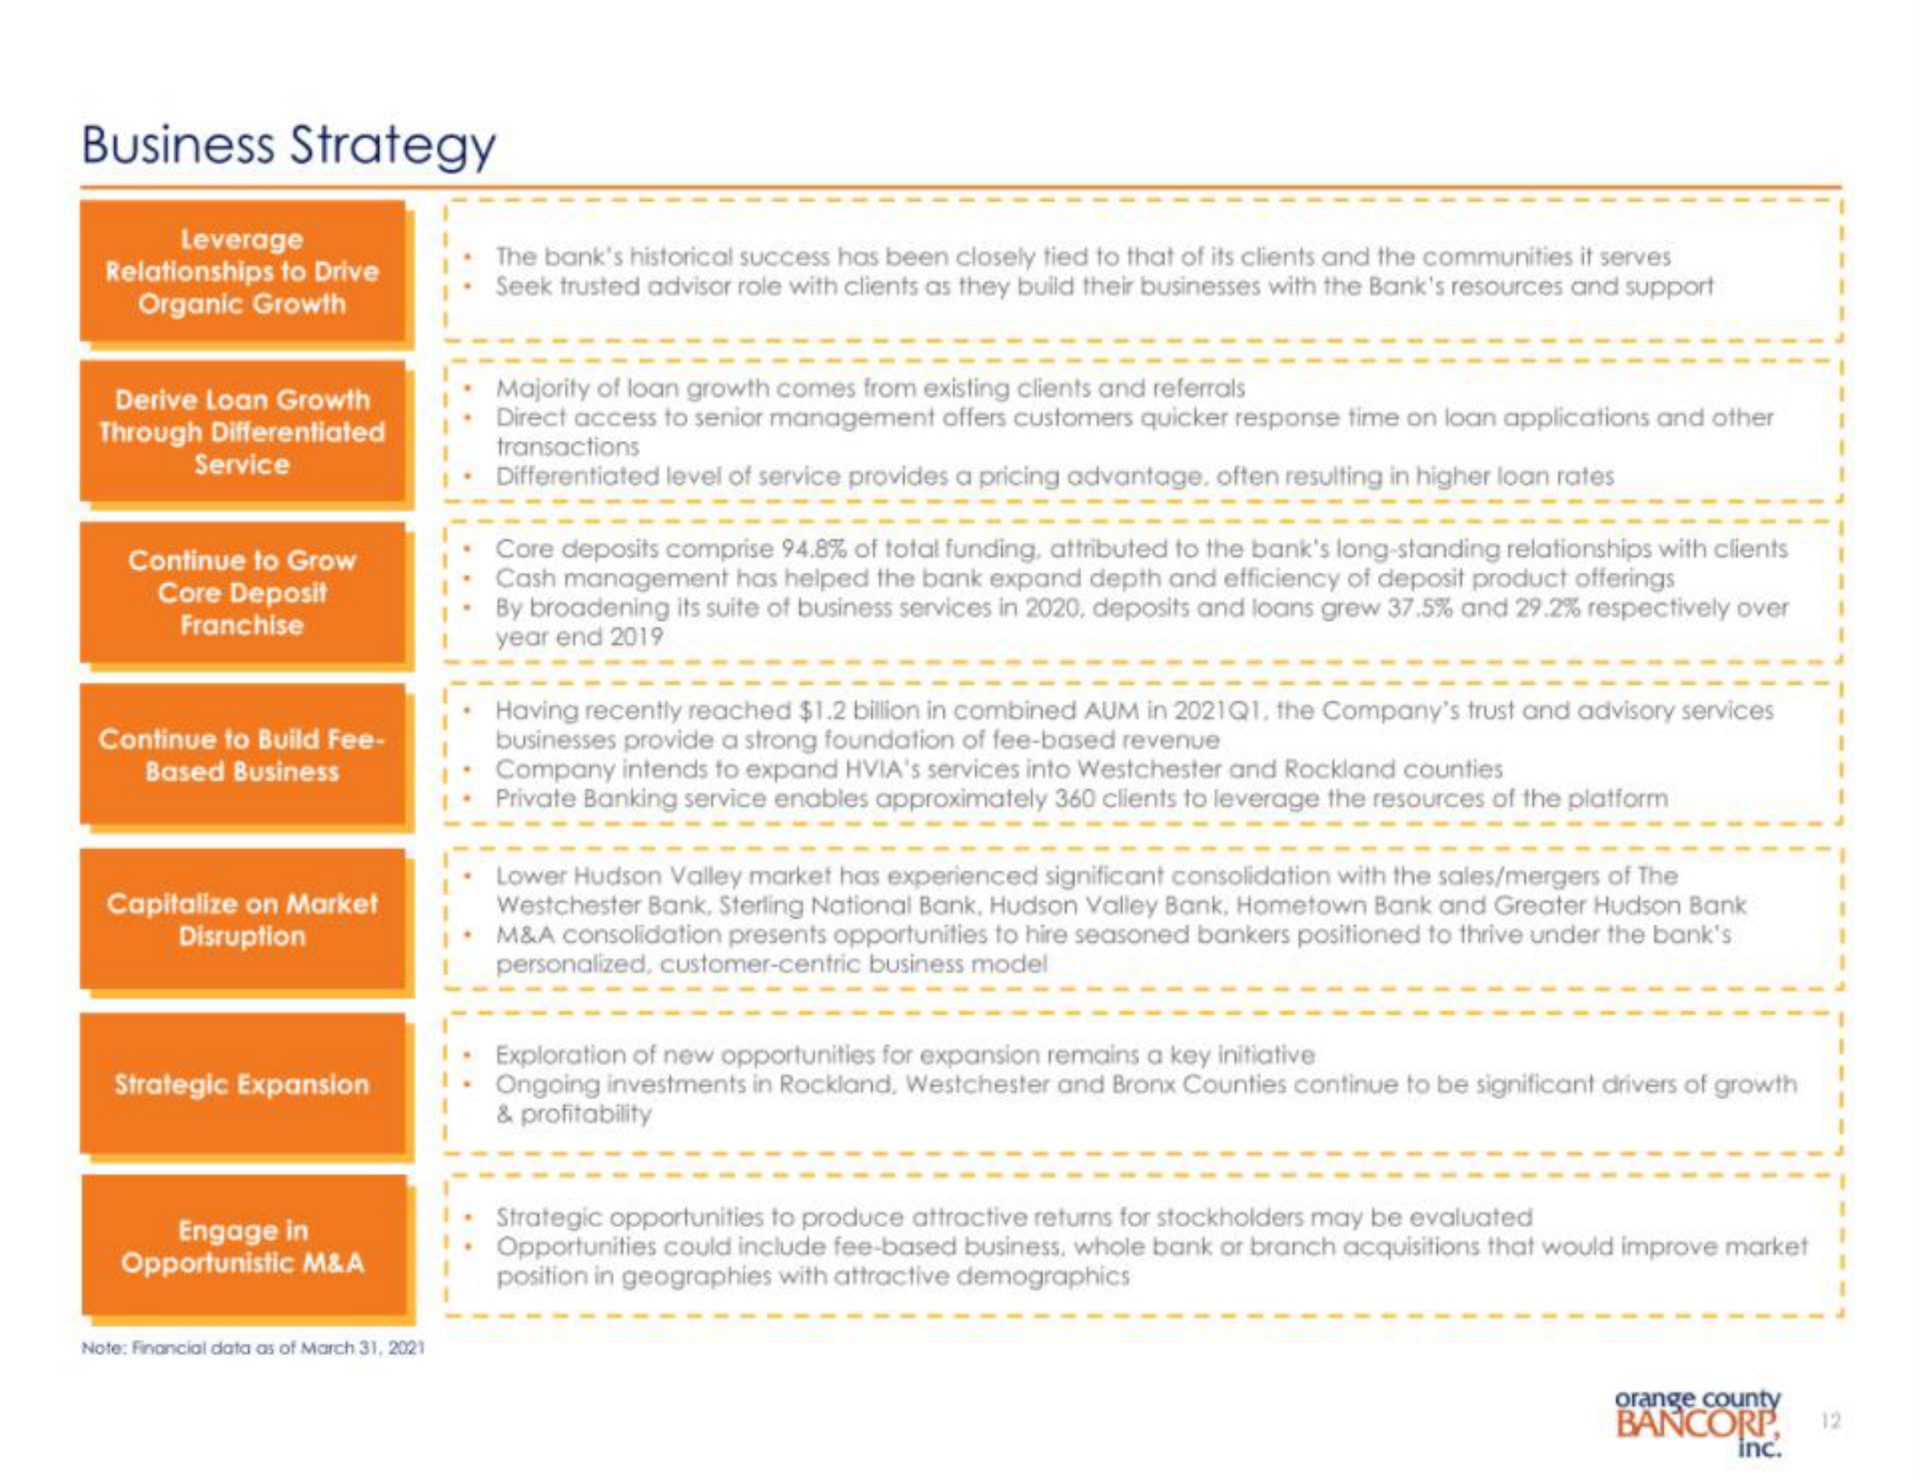 business strategy | Orange County Bancorp